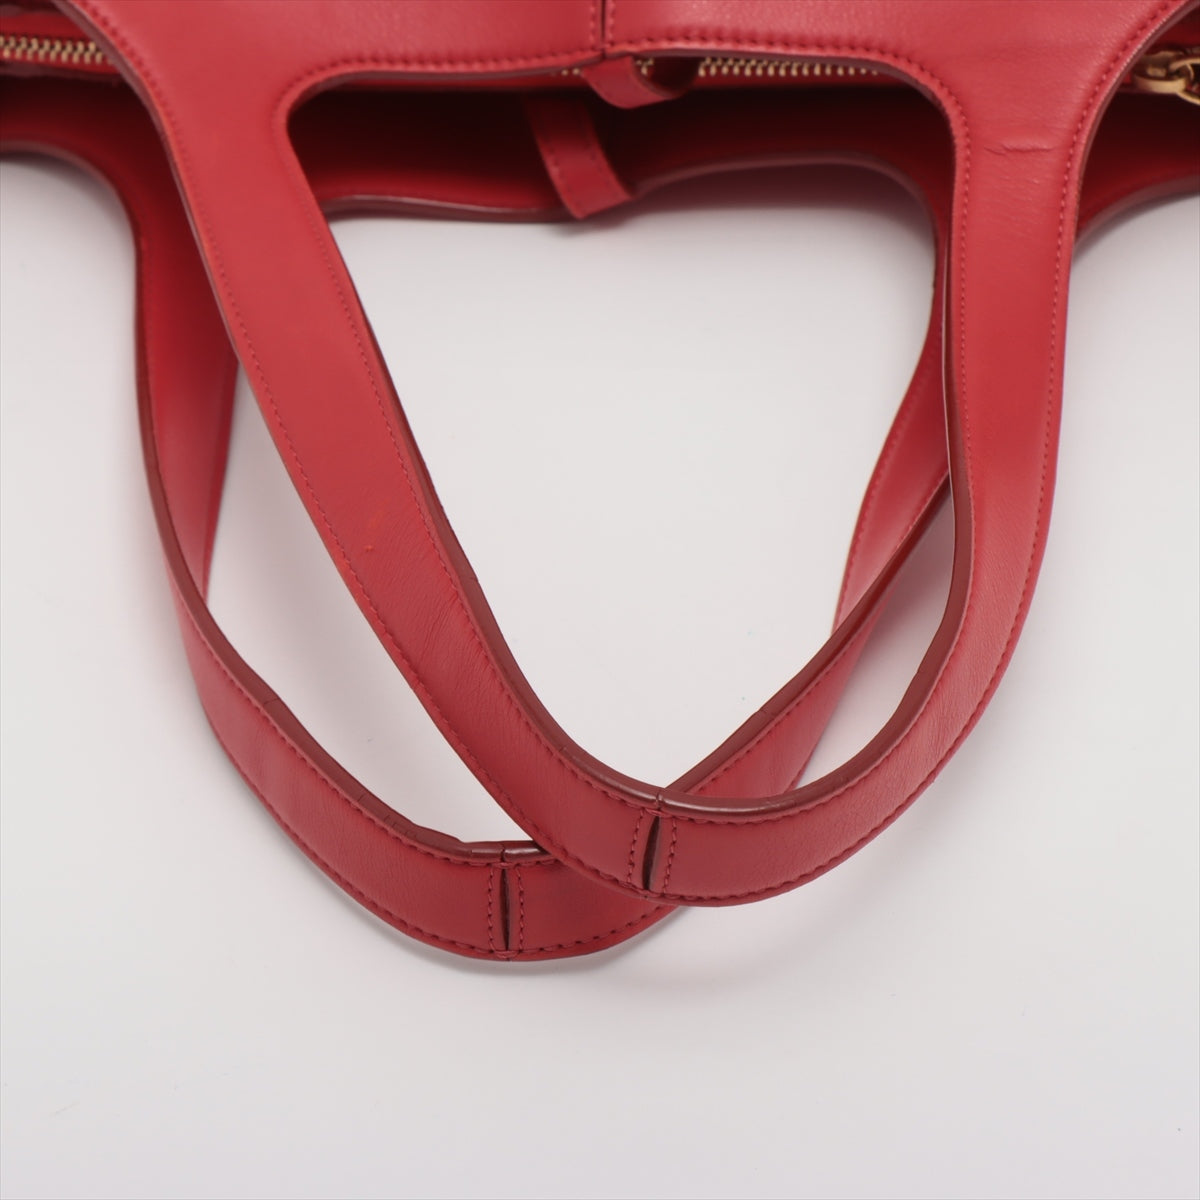 CELINE Tri Fold Leather Tote bag Red